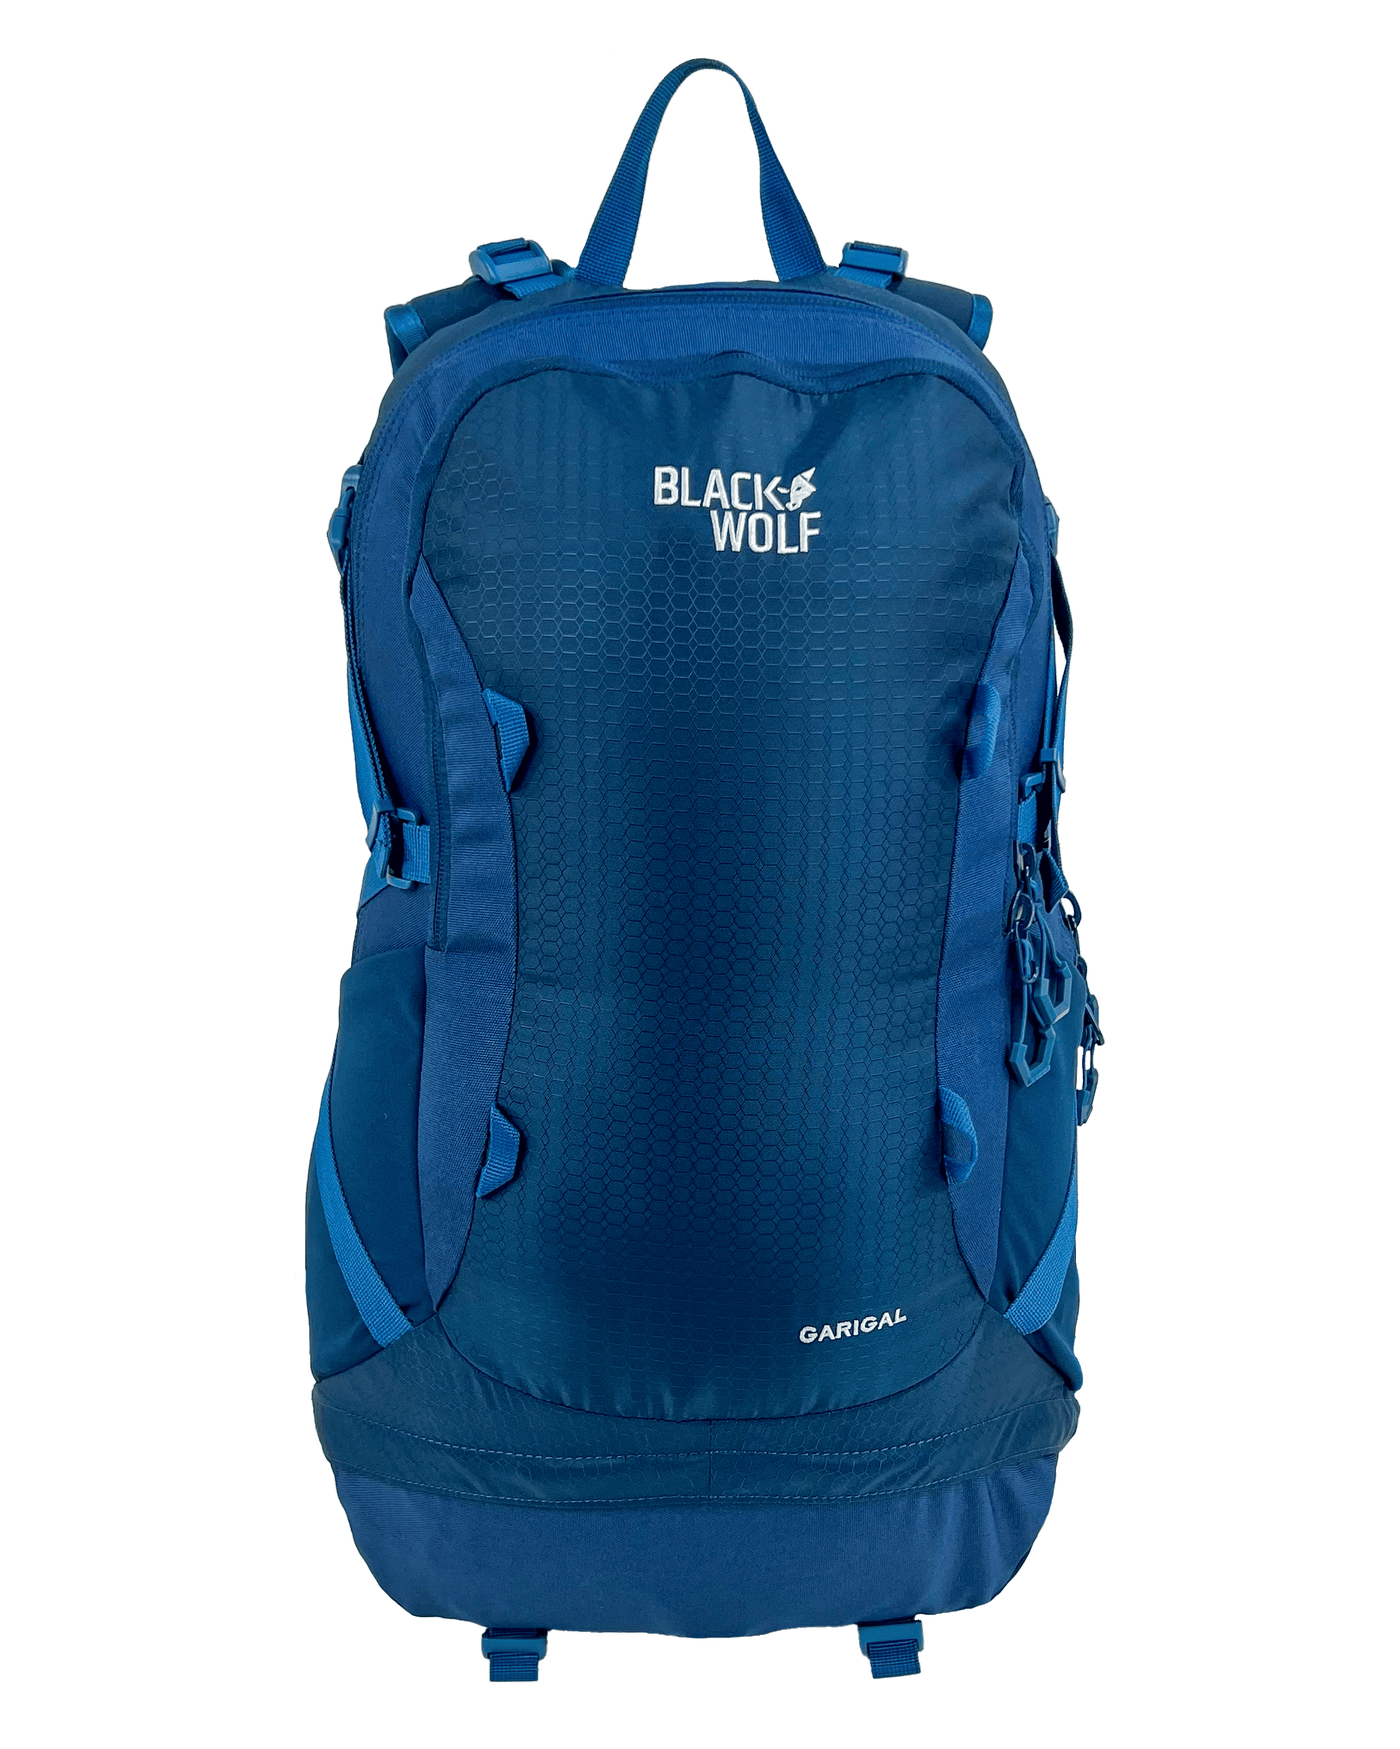 Garigal Backpack